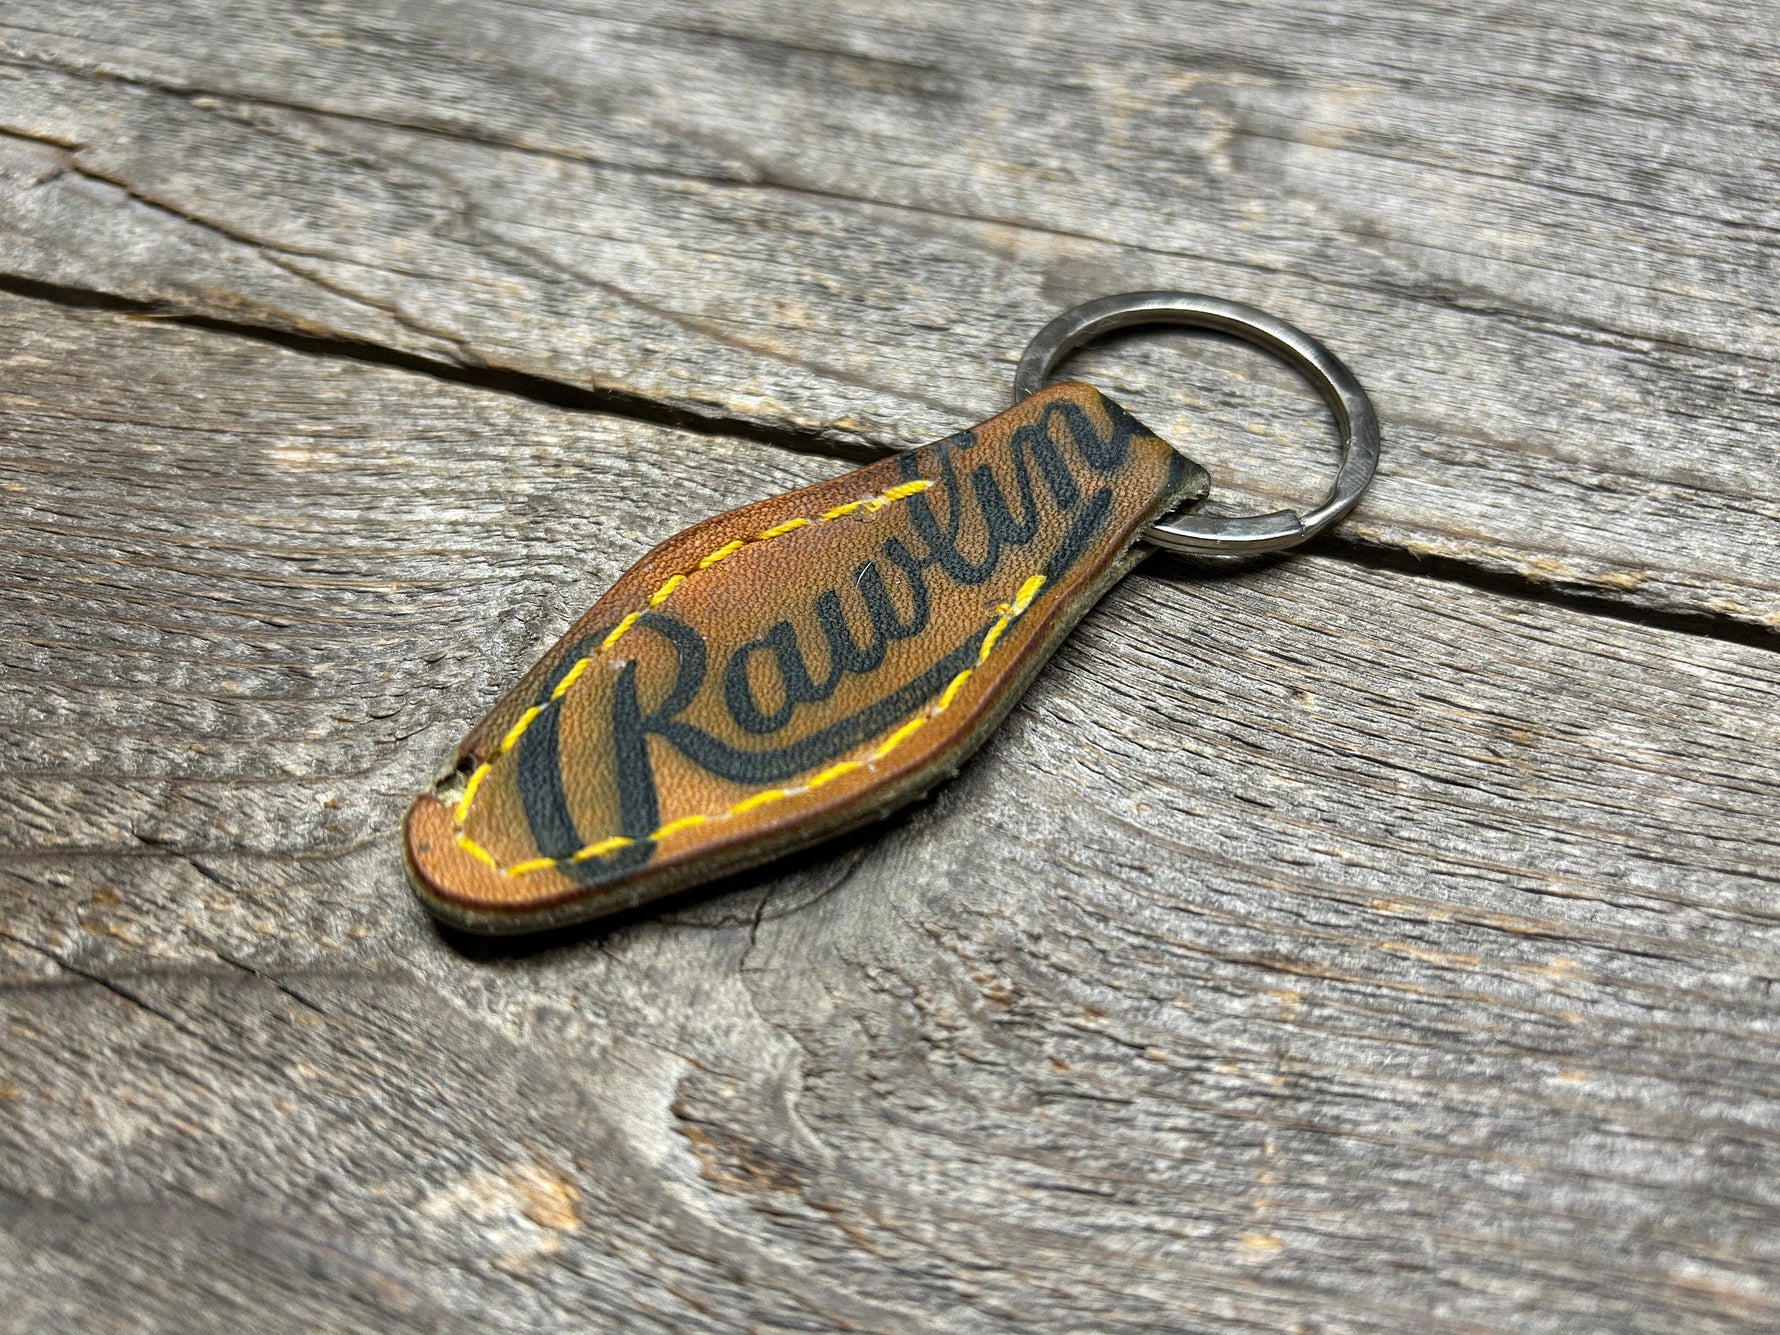 Vintage Rawlings Baseball Glove Key Chain - NEW STYLE! (vintage hotel key style)!